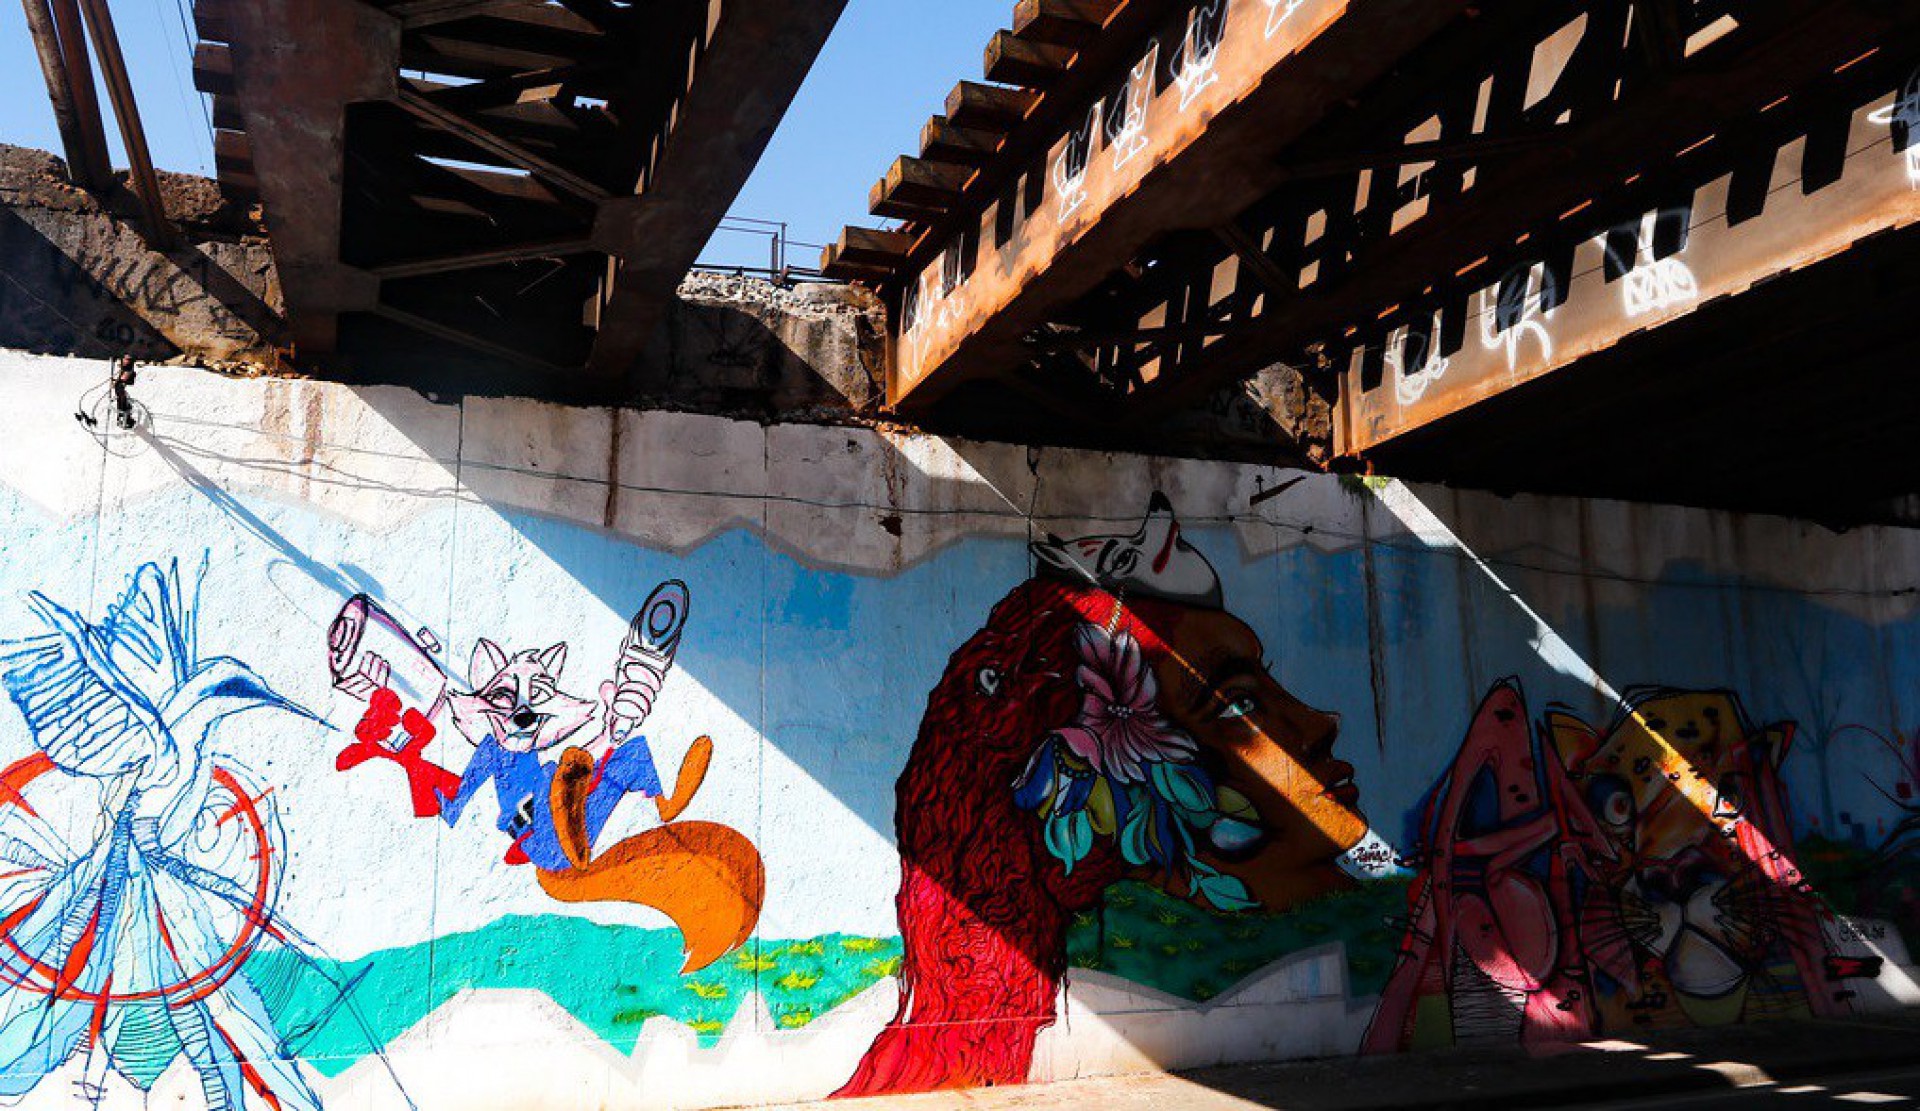 Fotos do mural de grafite feito no viaduto. - Joice Nascimento